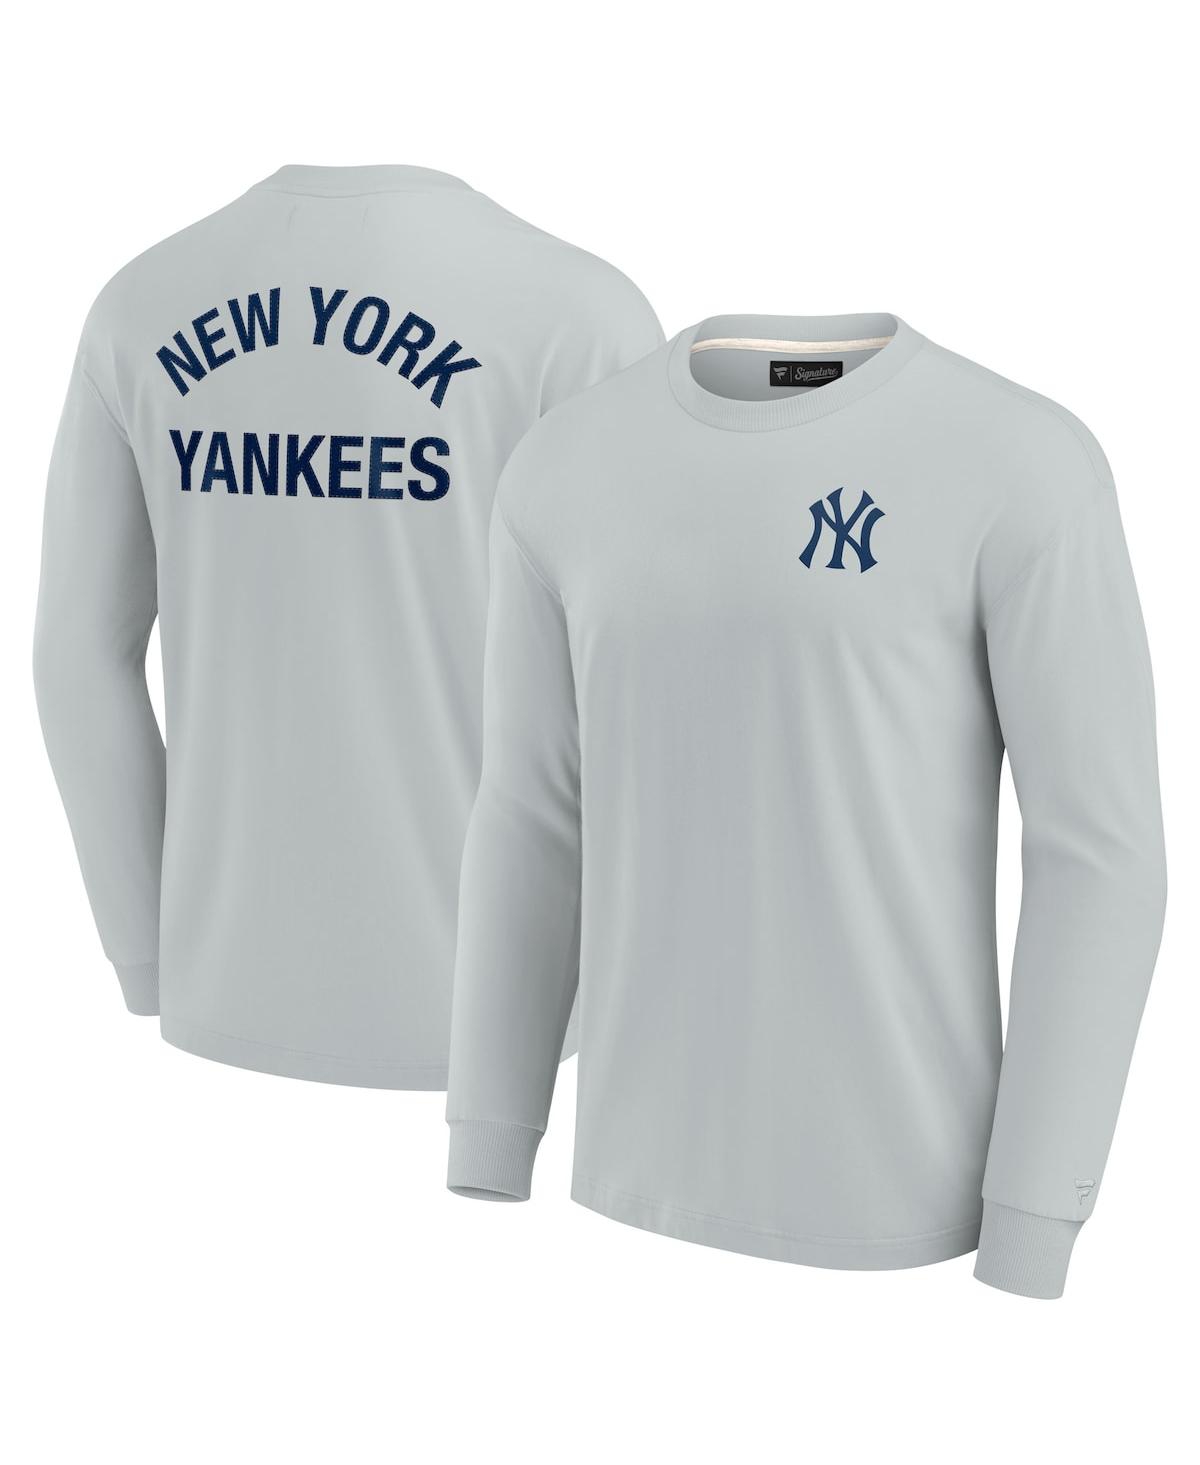 Men's and Women's Fanatics Signature Gray New York Yankees Super Soft Long Sleeve T-shirt - Gray